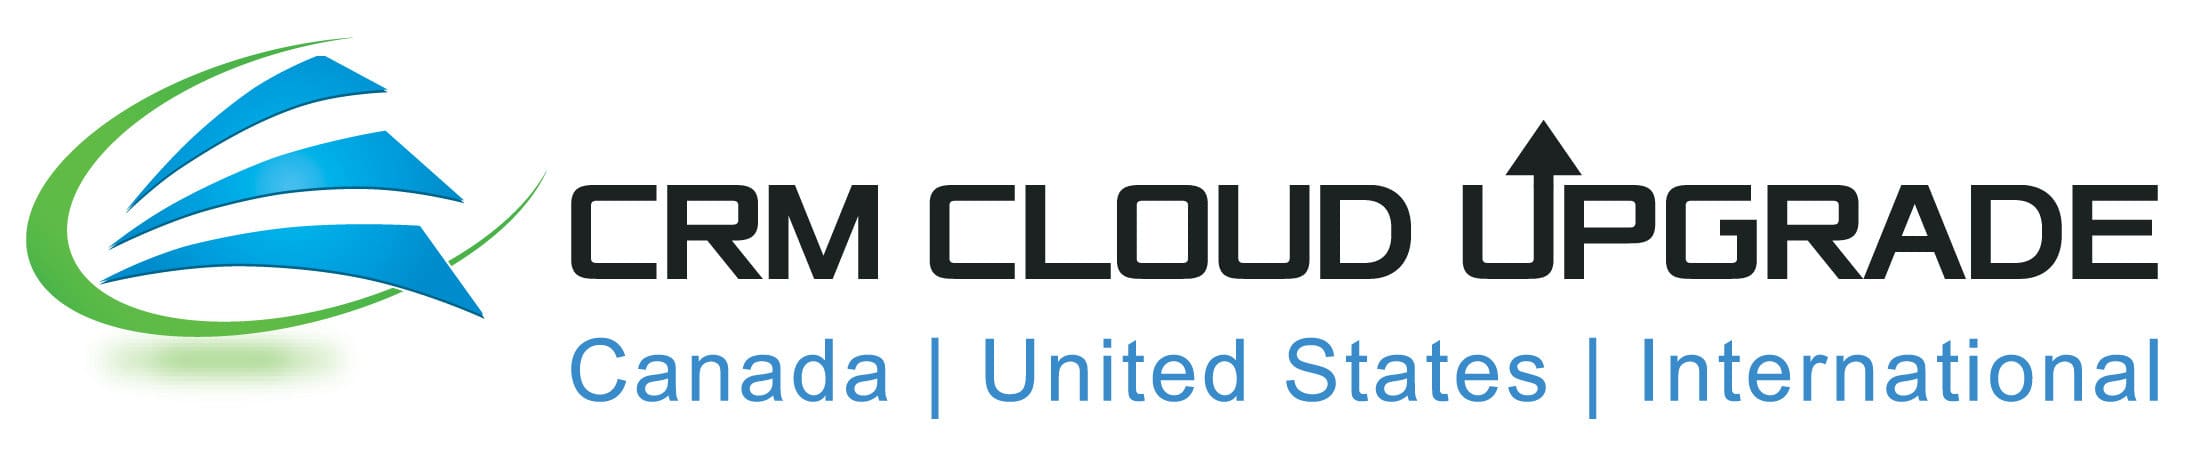 CRM Cloud Upgrade Logo